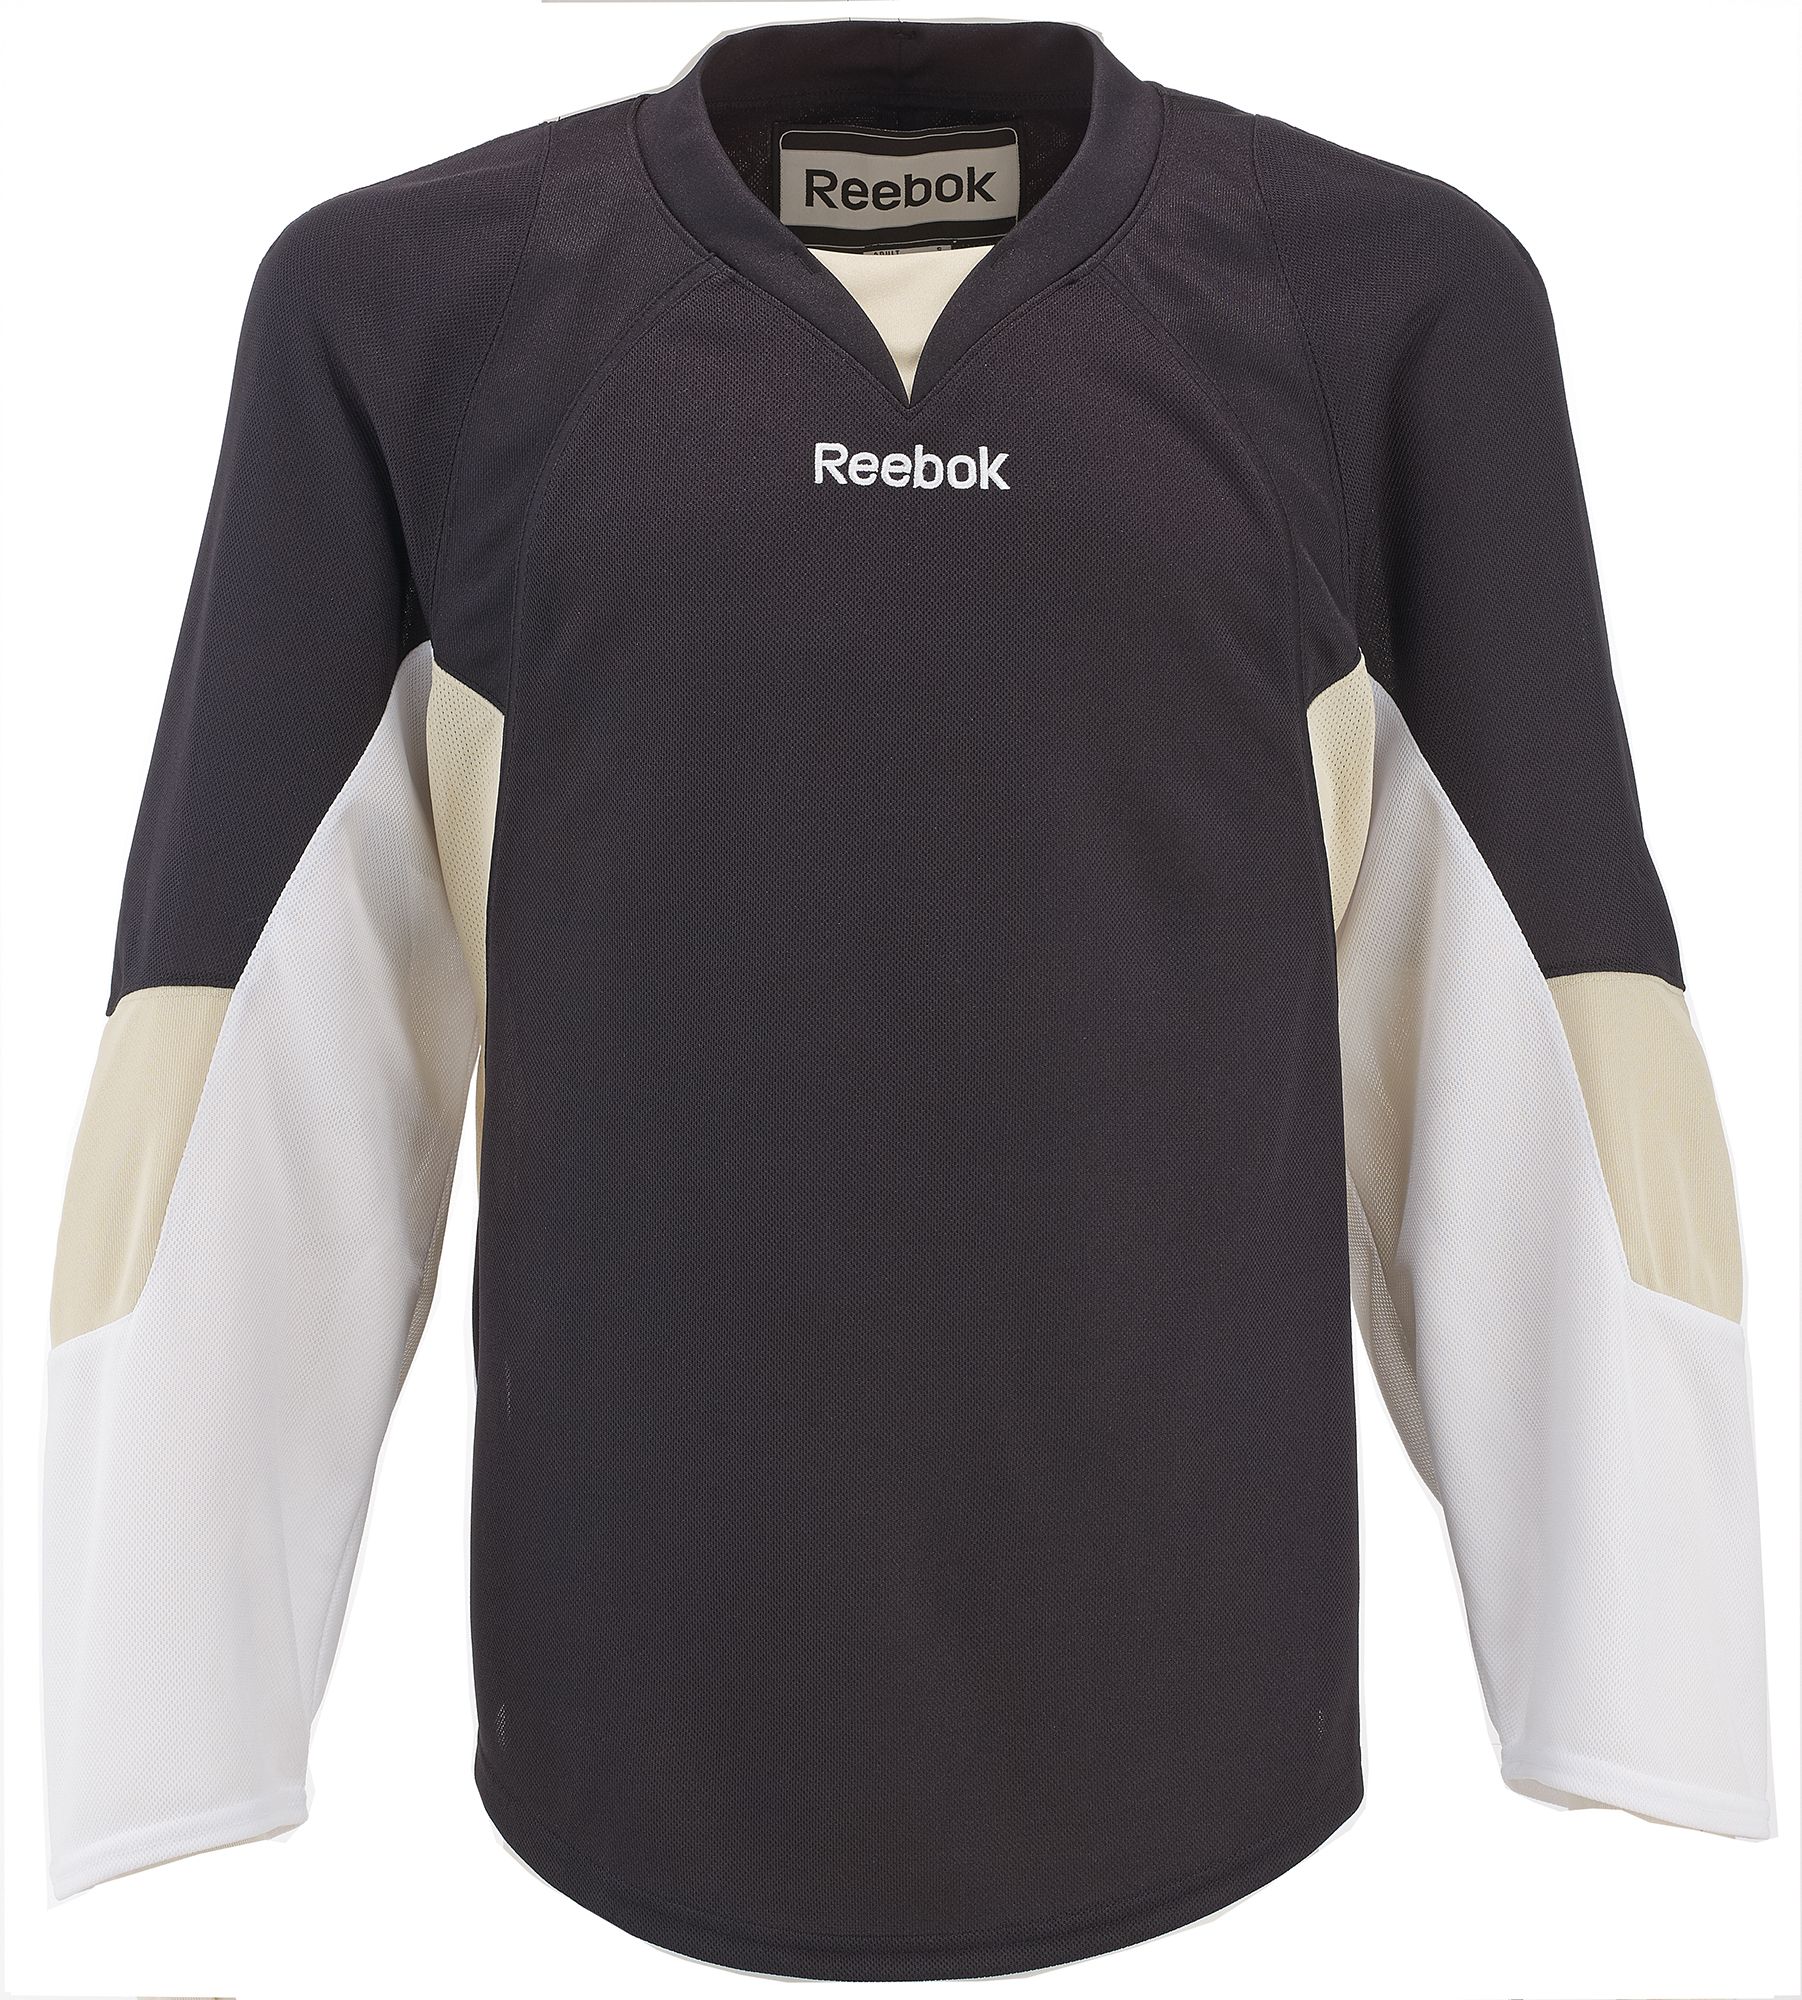 buy reebok apparel online